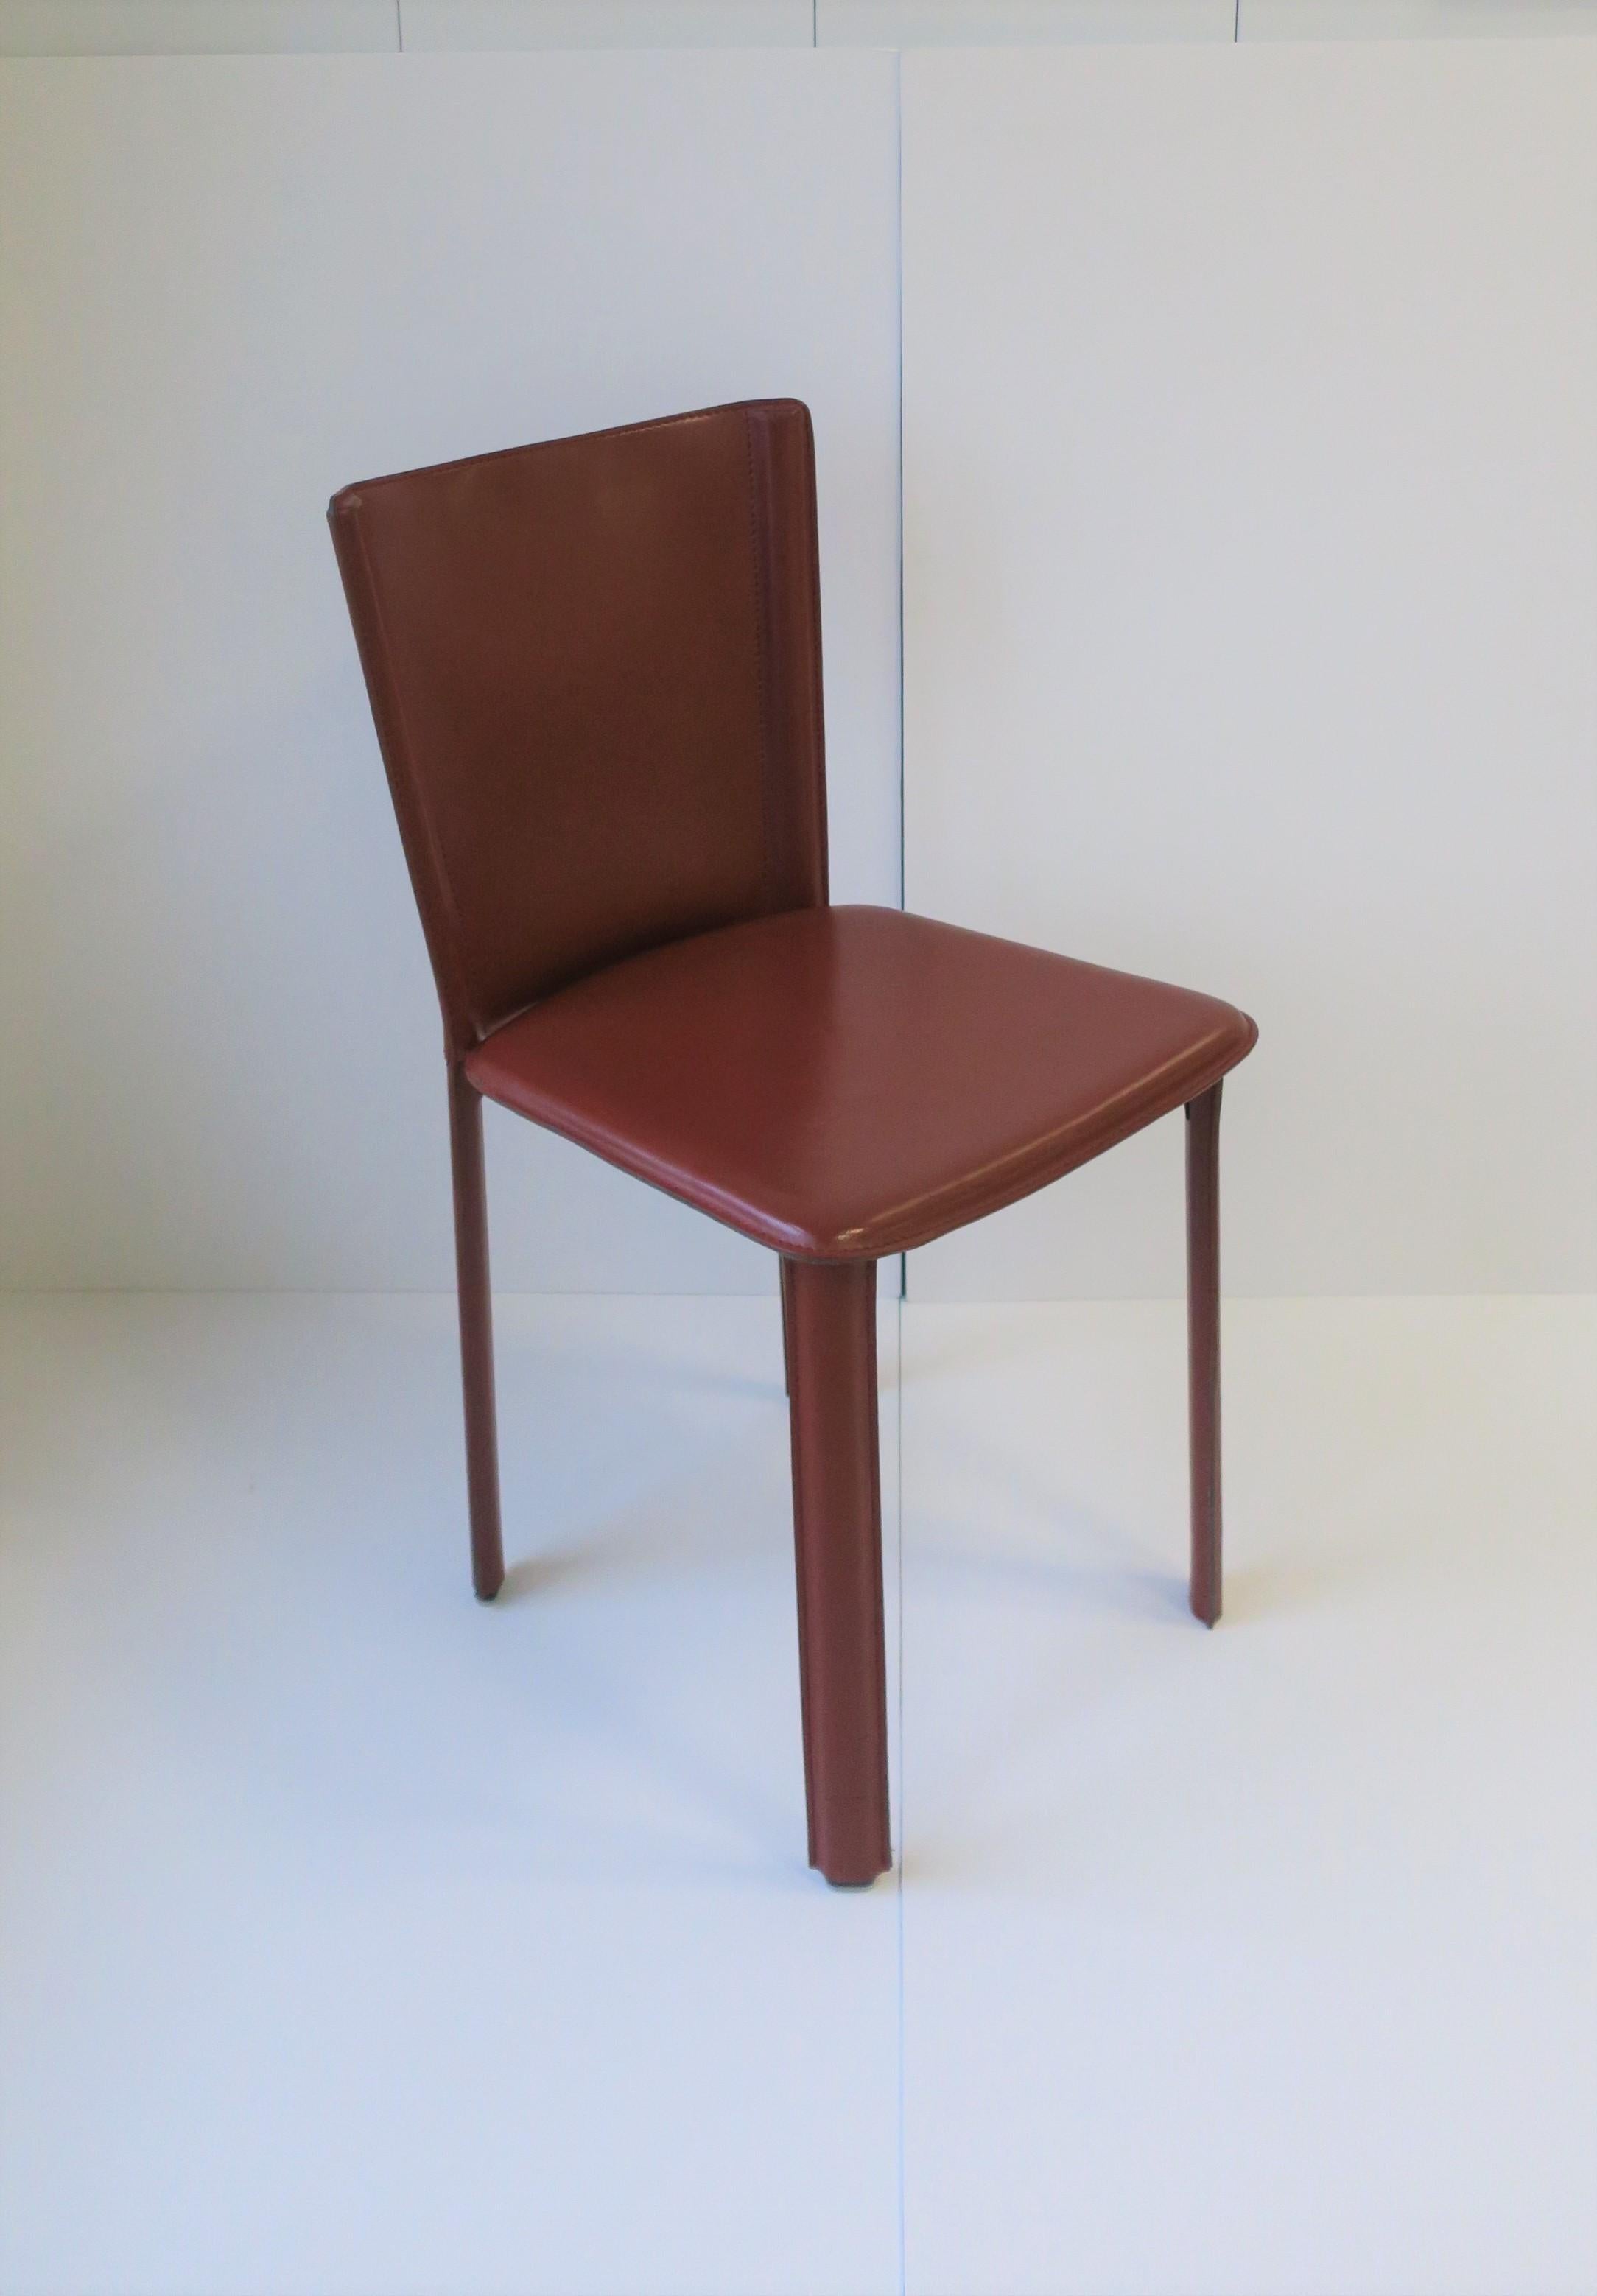 Designer Italian Red Burgundy Leather Side or Desk Chair by Frag 2